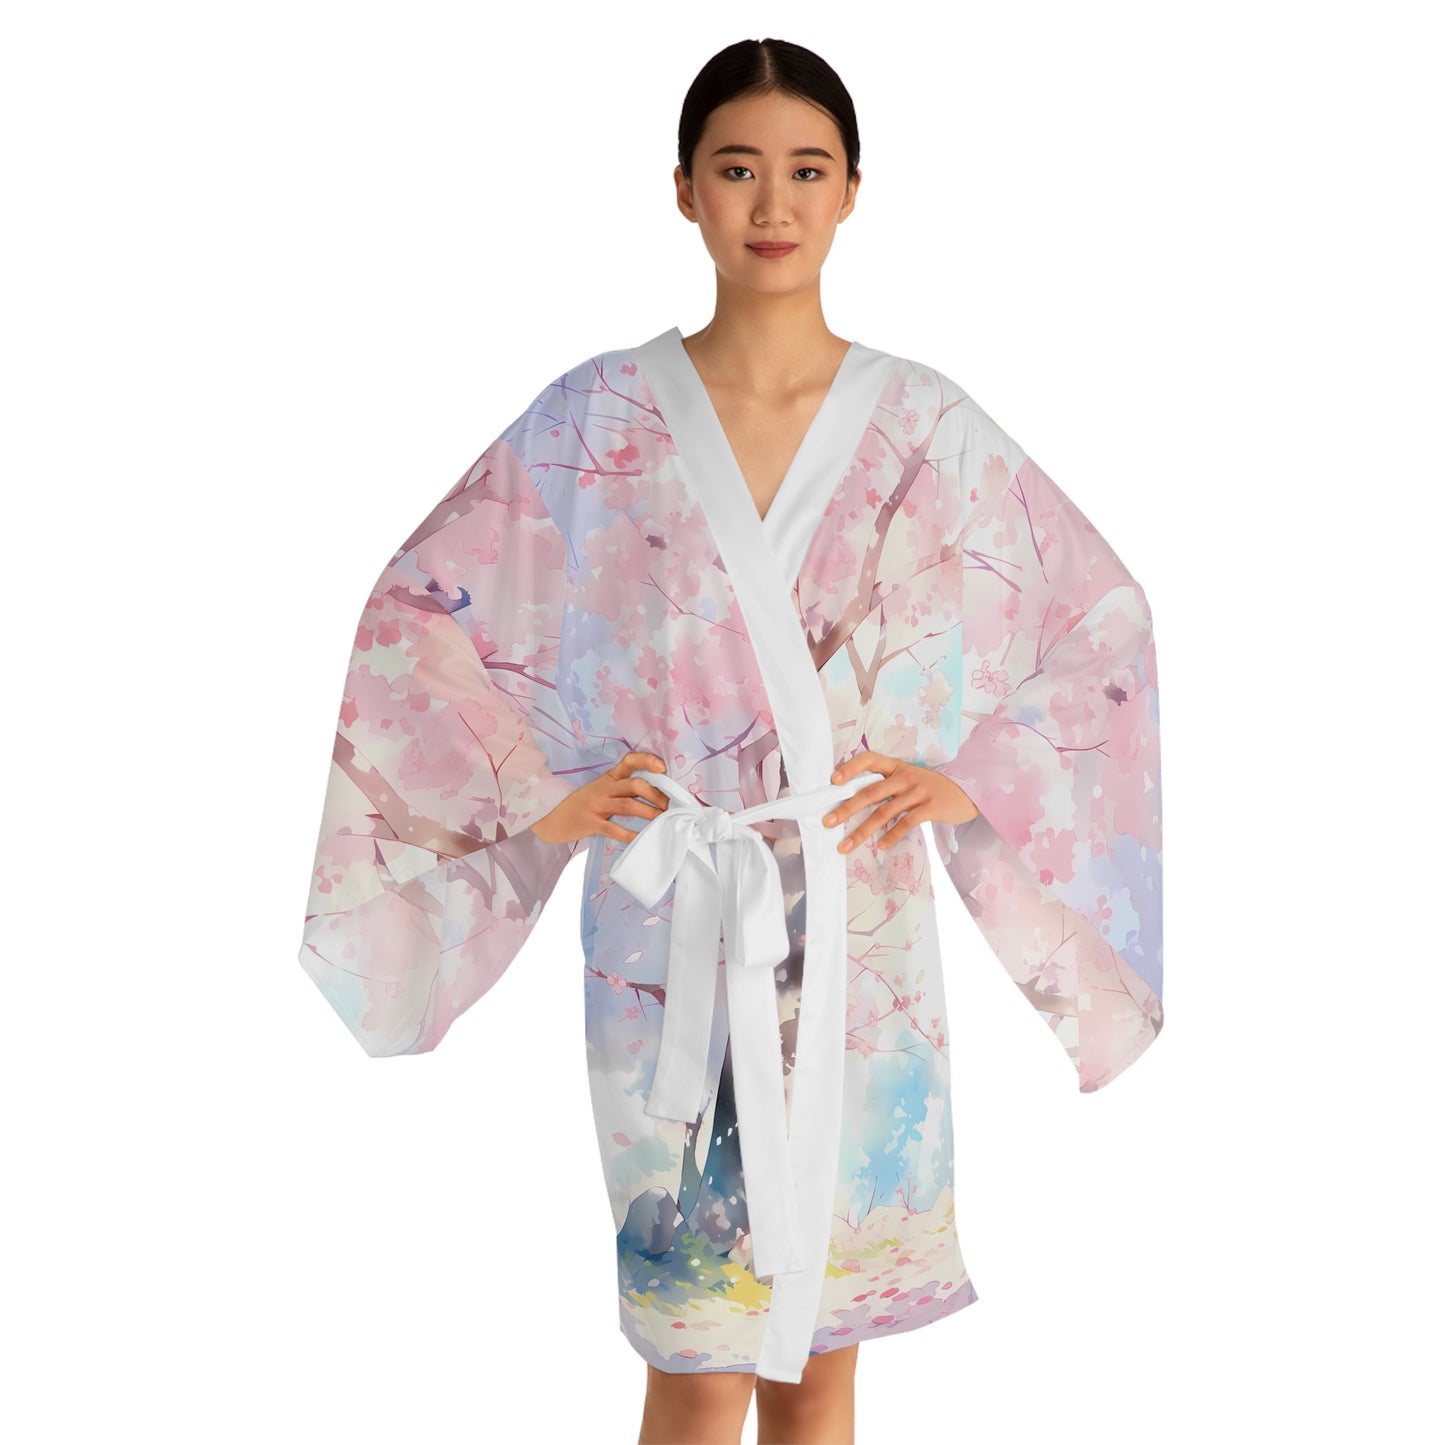 Cherry Blossom Belle - Anime Kimono Robe